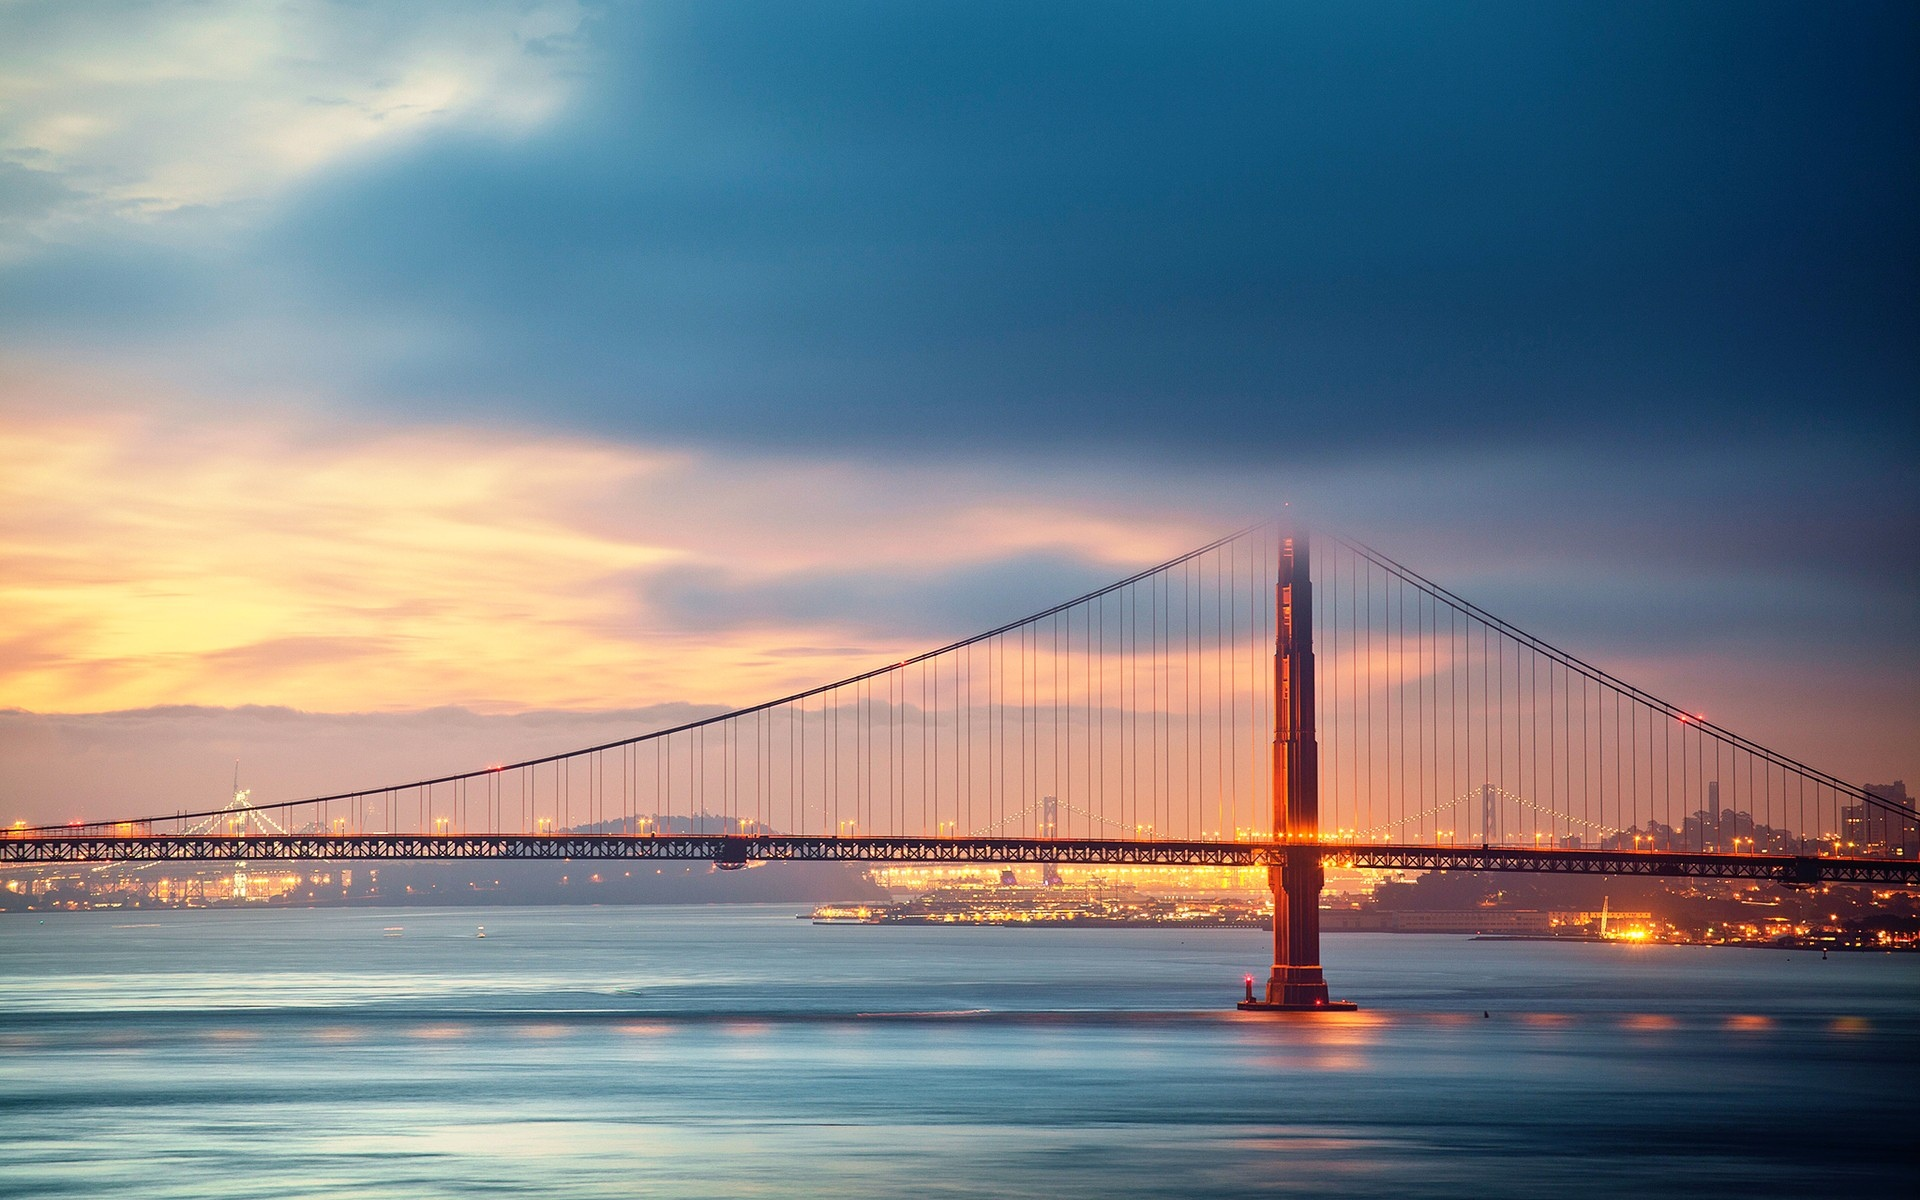 lights, городские пейзажи, мосты, Golden Gate Bridge, cityscapes, фонари, bridges, мост Золотые Ворота в Сан-Франциско, San Francisco, rivers, рек